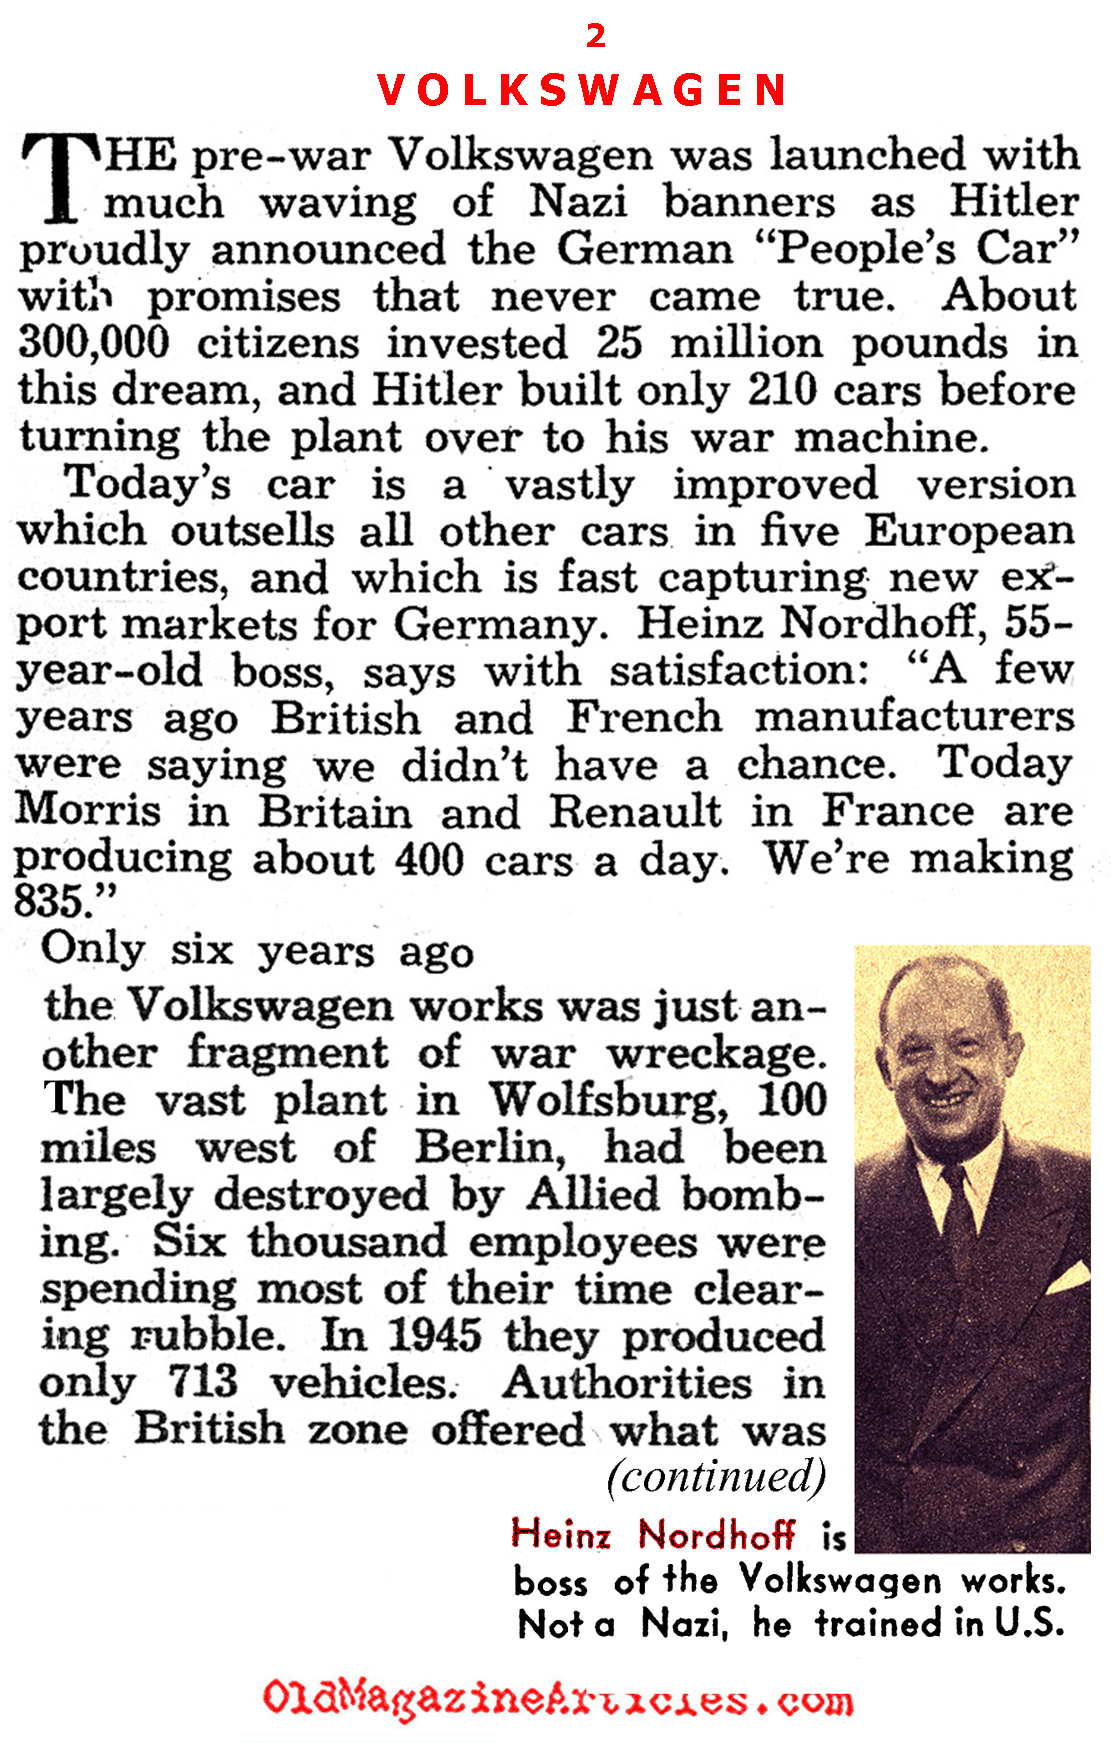 The Amazing Volkswagen (Pic Magazine, 1955)